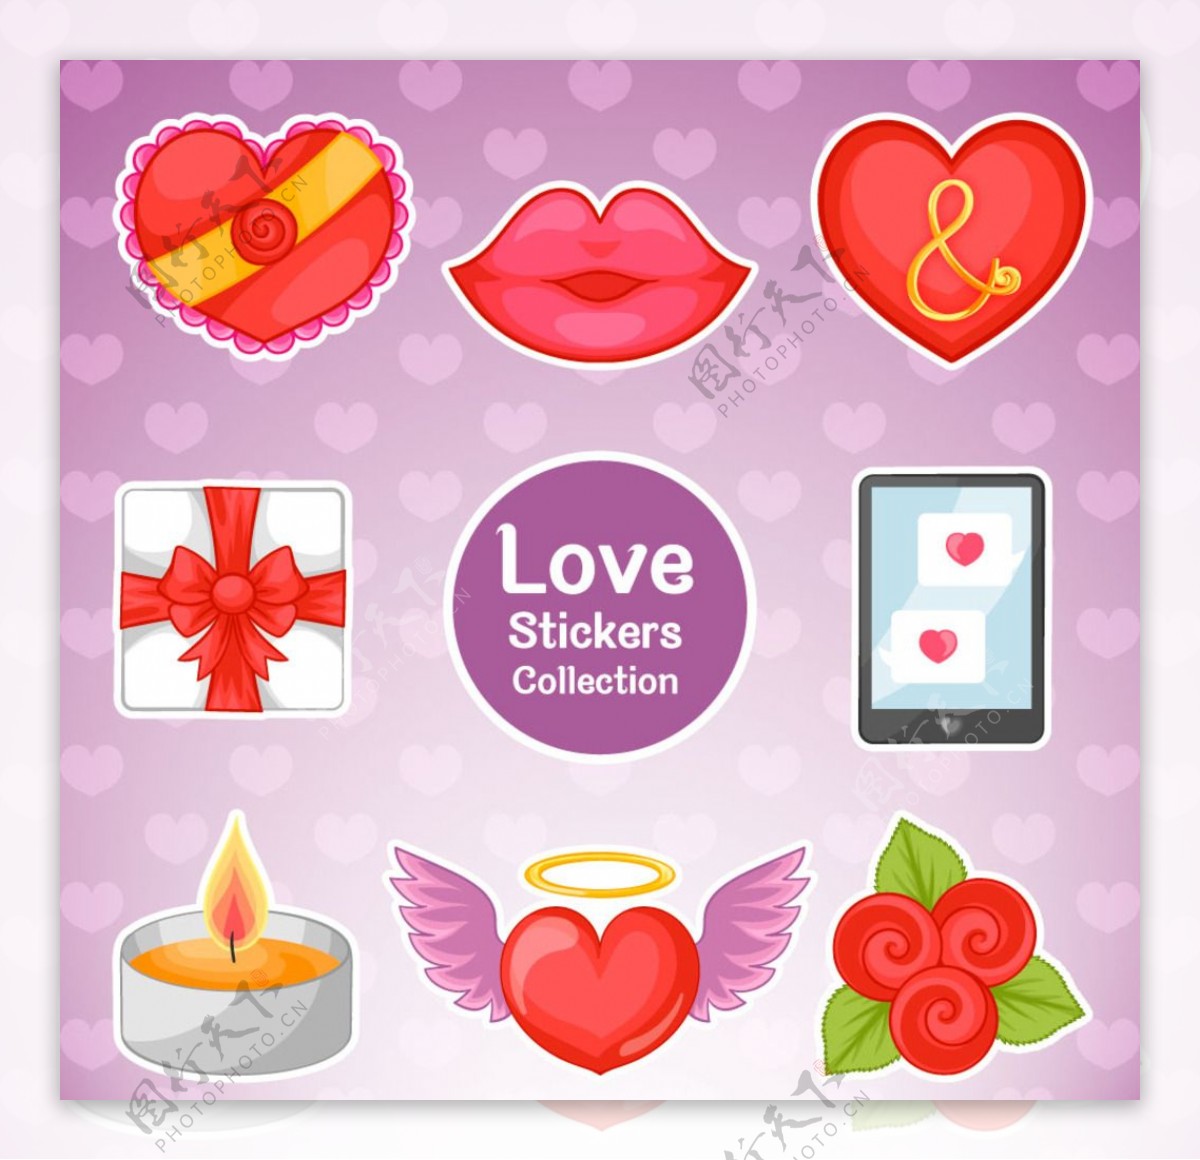 LOVE爱设计图__其他图标_标志图标_设计图库_昵图网nipic.com